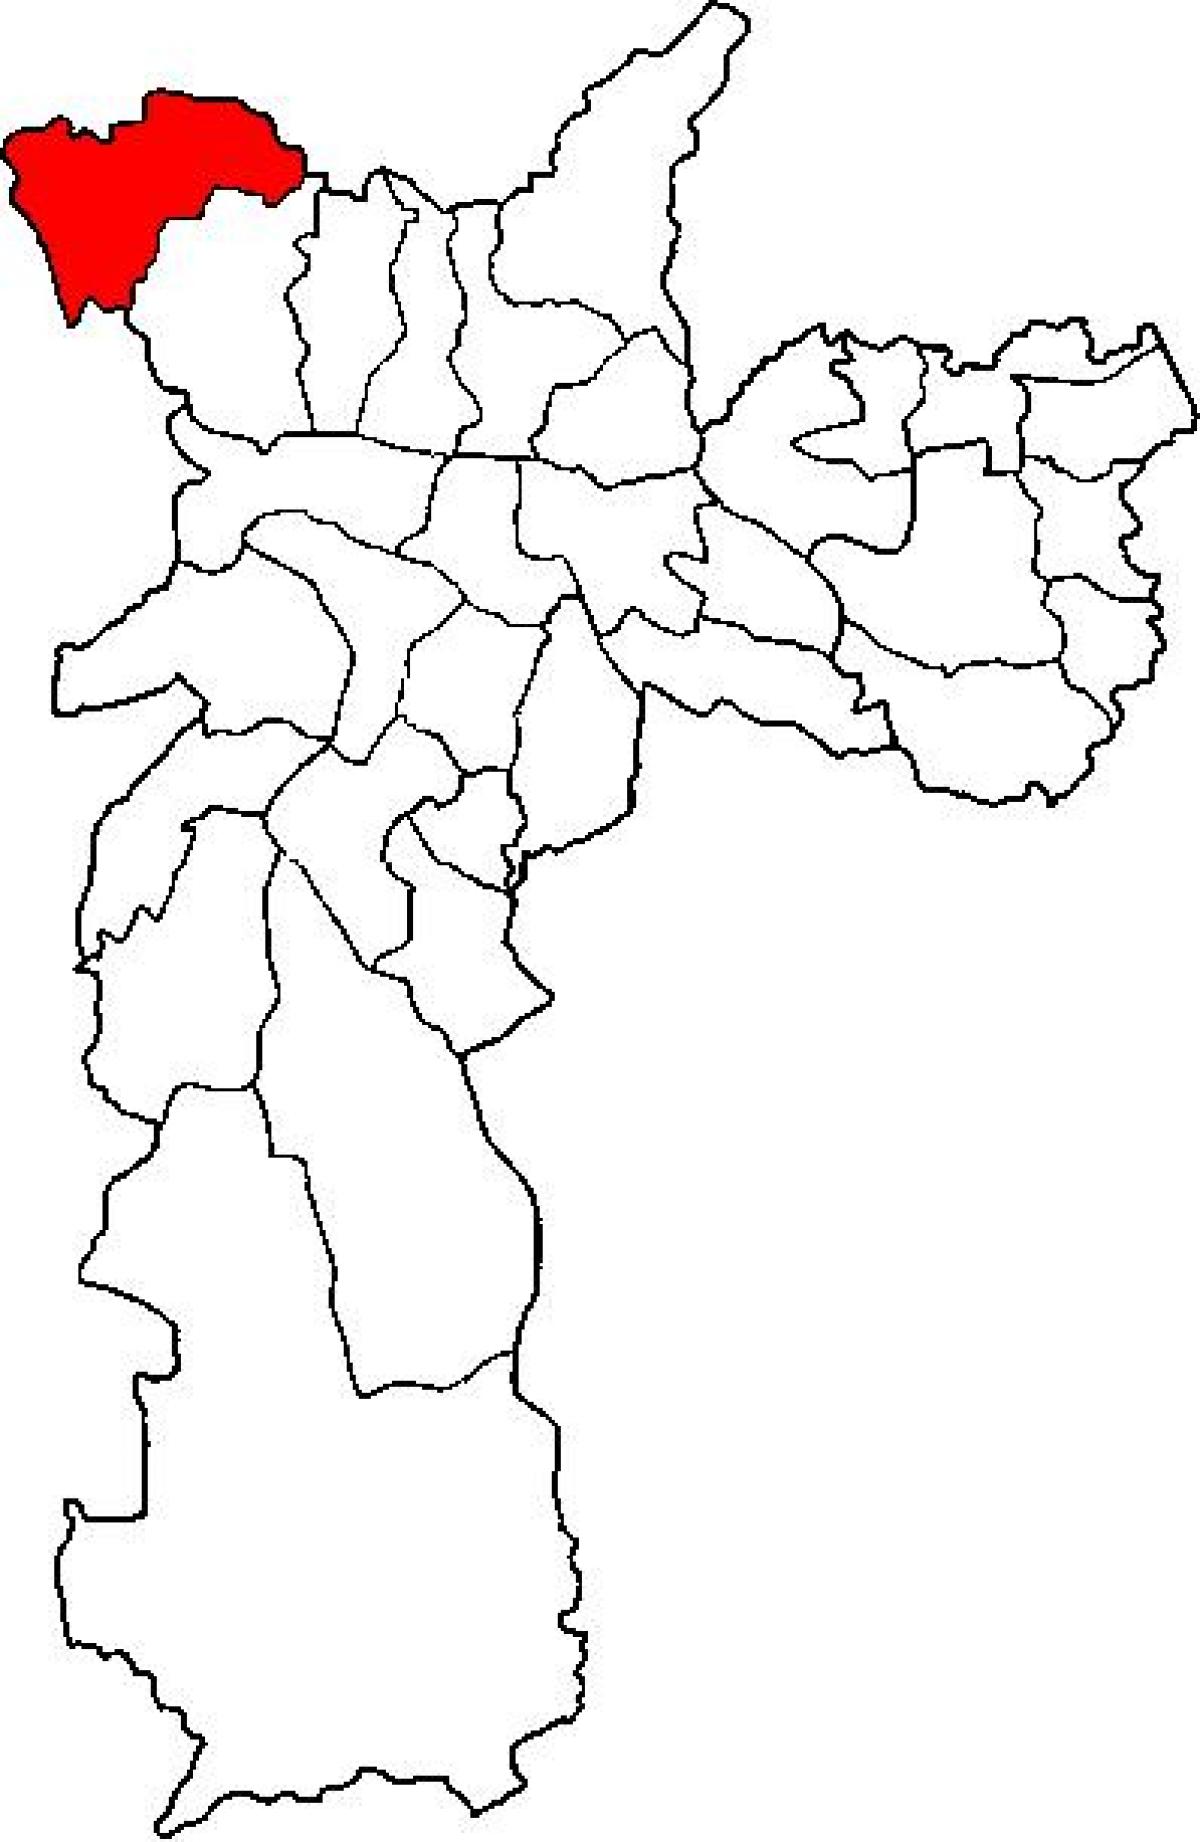 Kartta Perus sub-prefektuurissa São Paulo